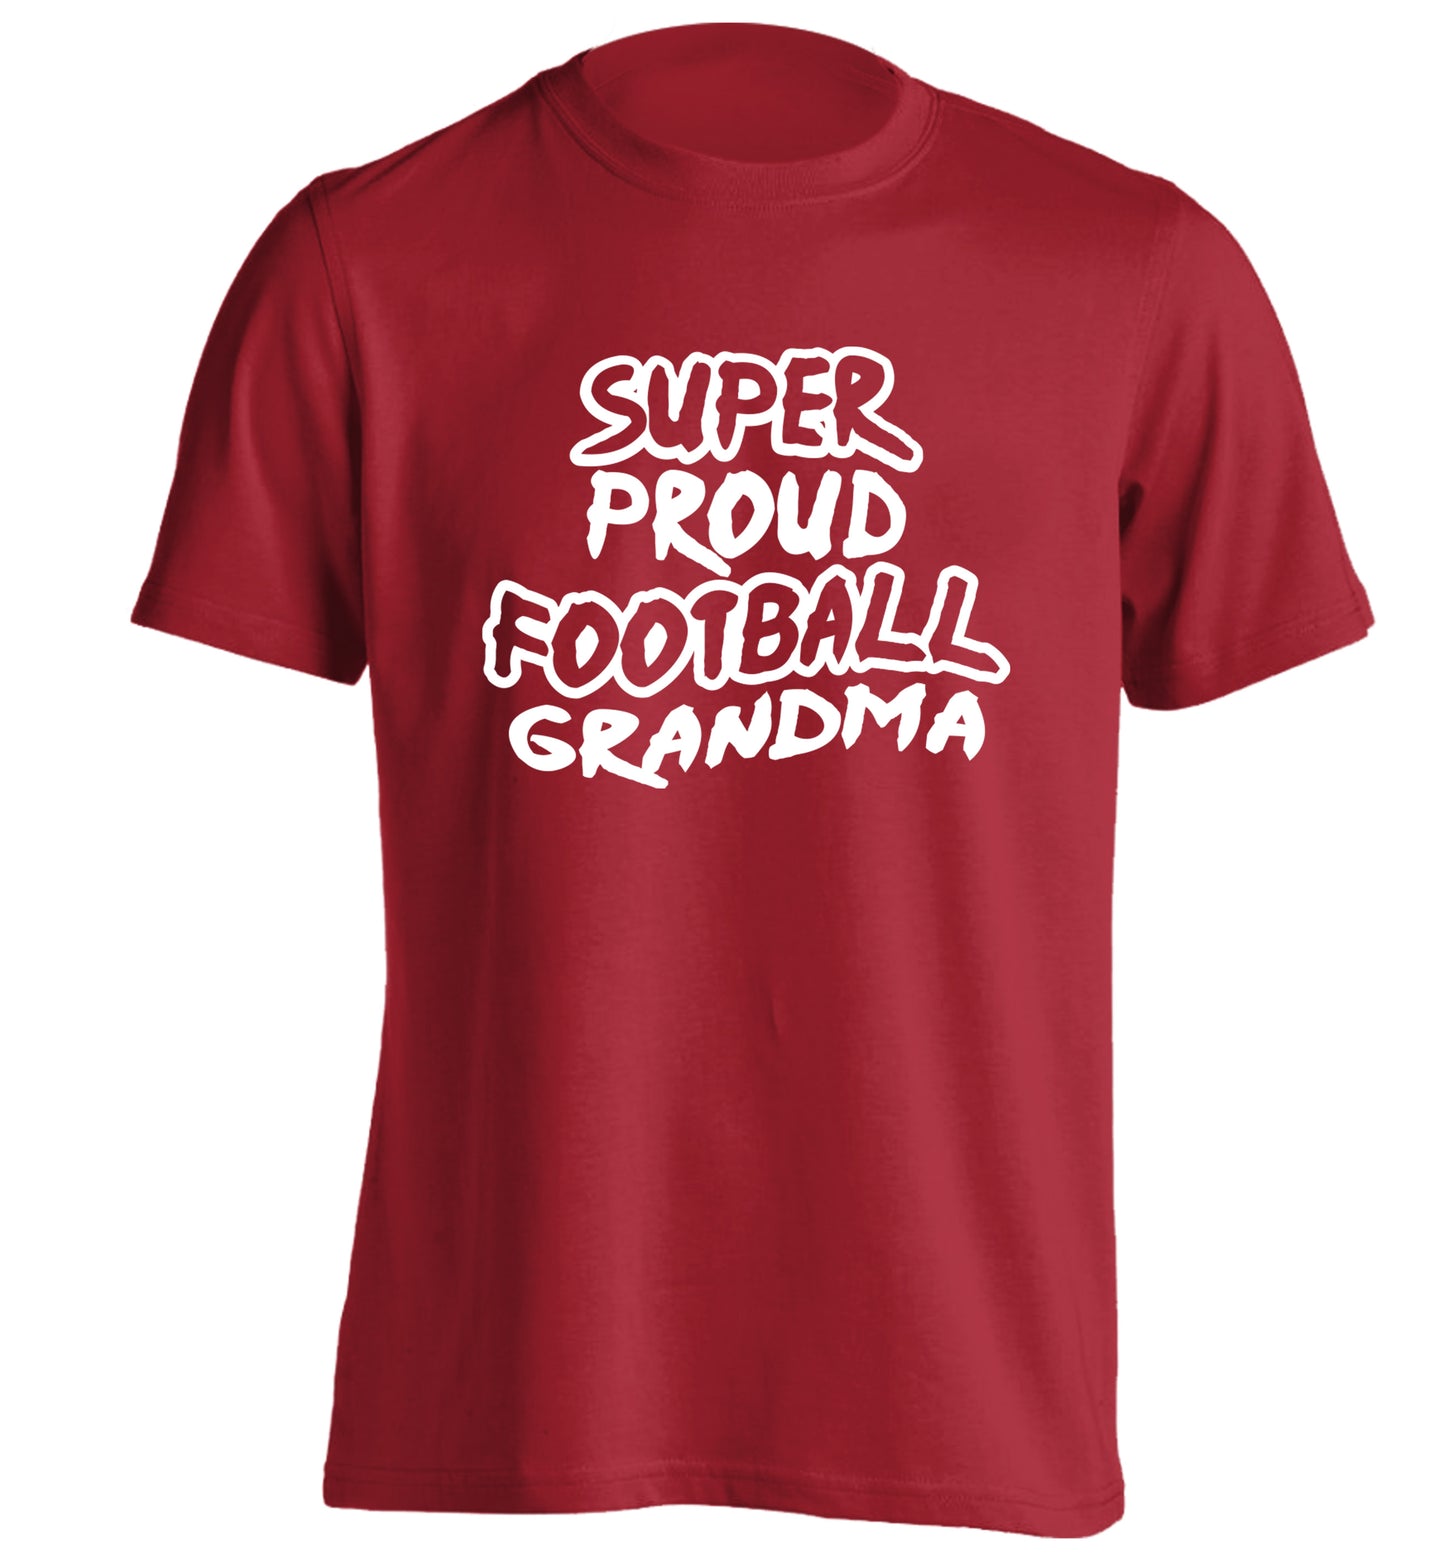 Super proud football grandma adults unisexred Tshirt 2XL